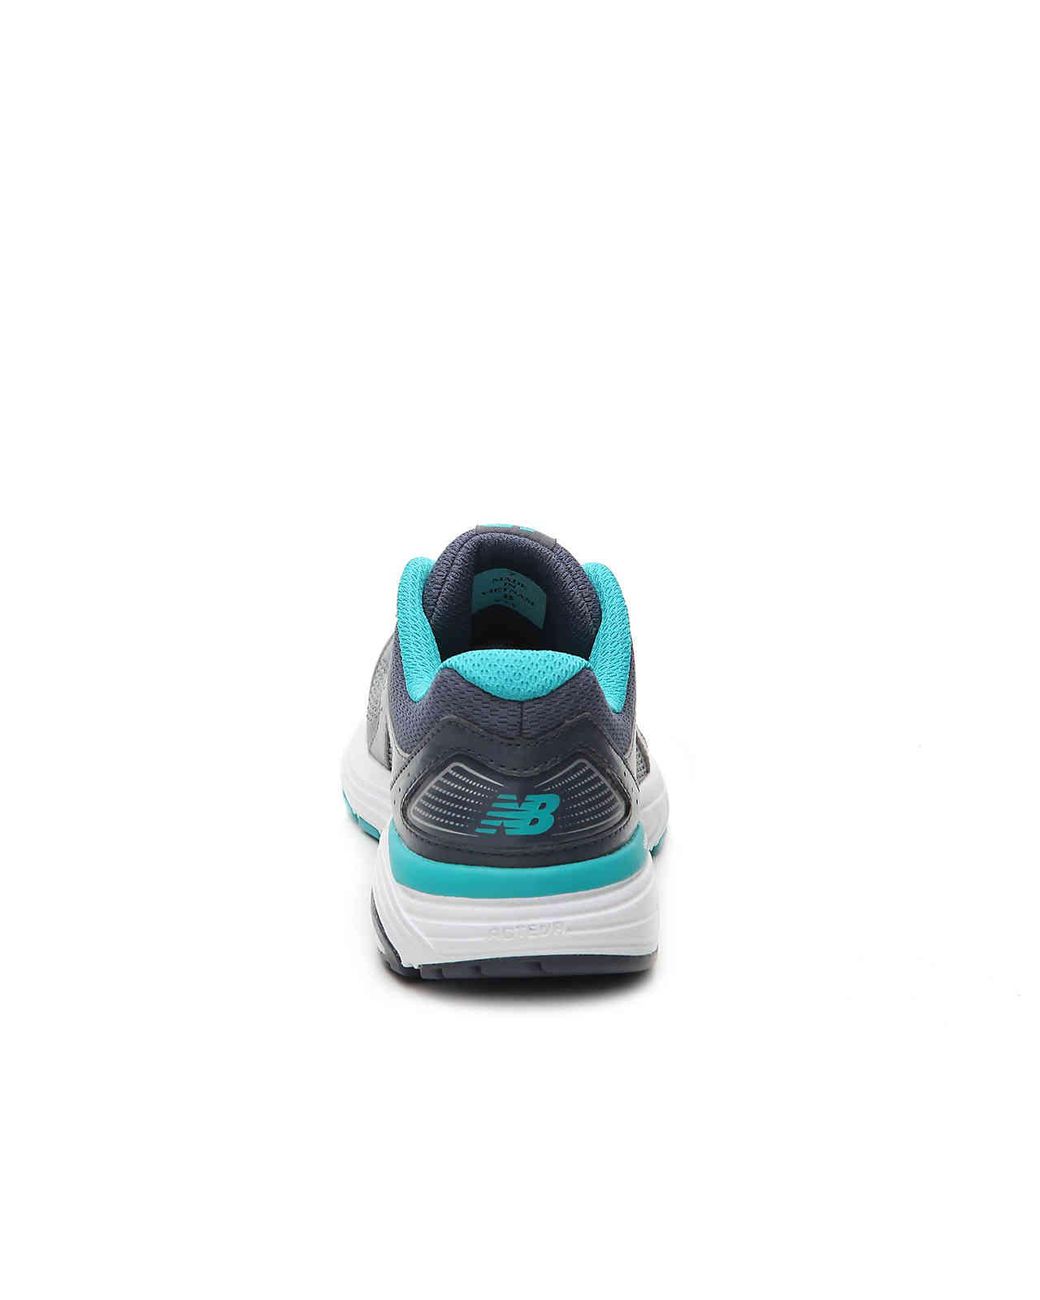 New Balance 560 V7 Running Shoe in Gray | Lyst